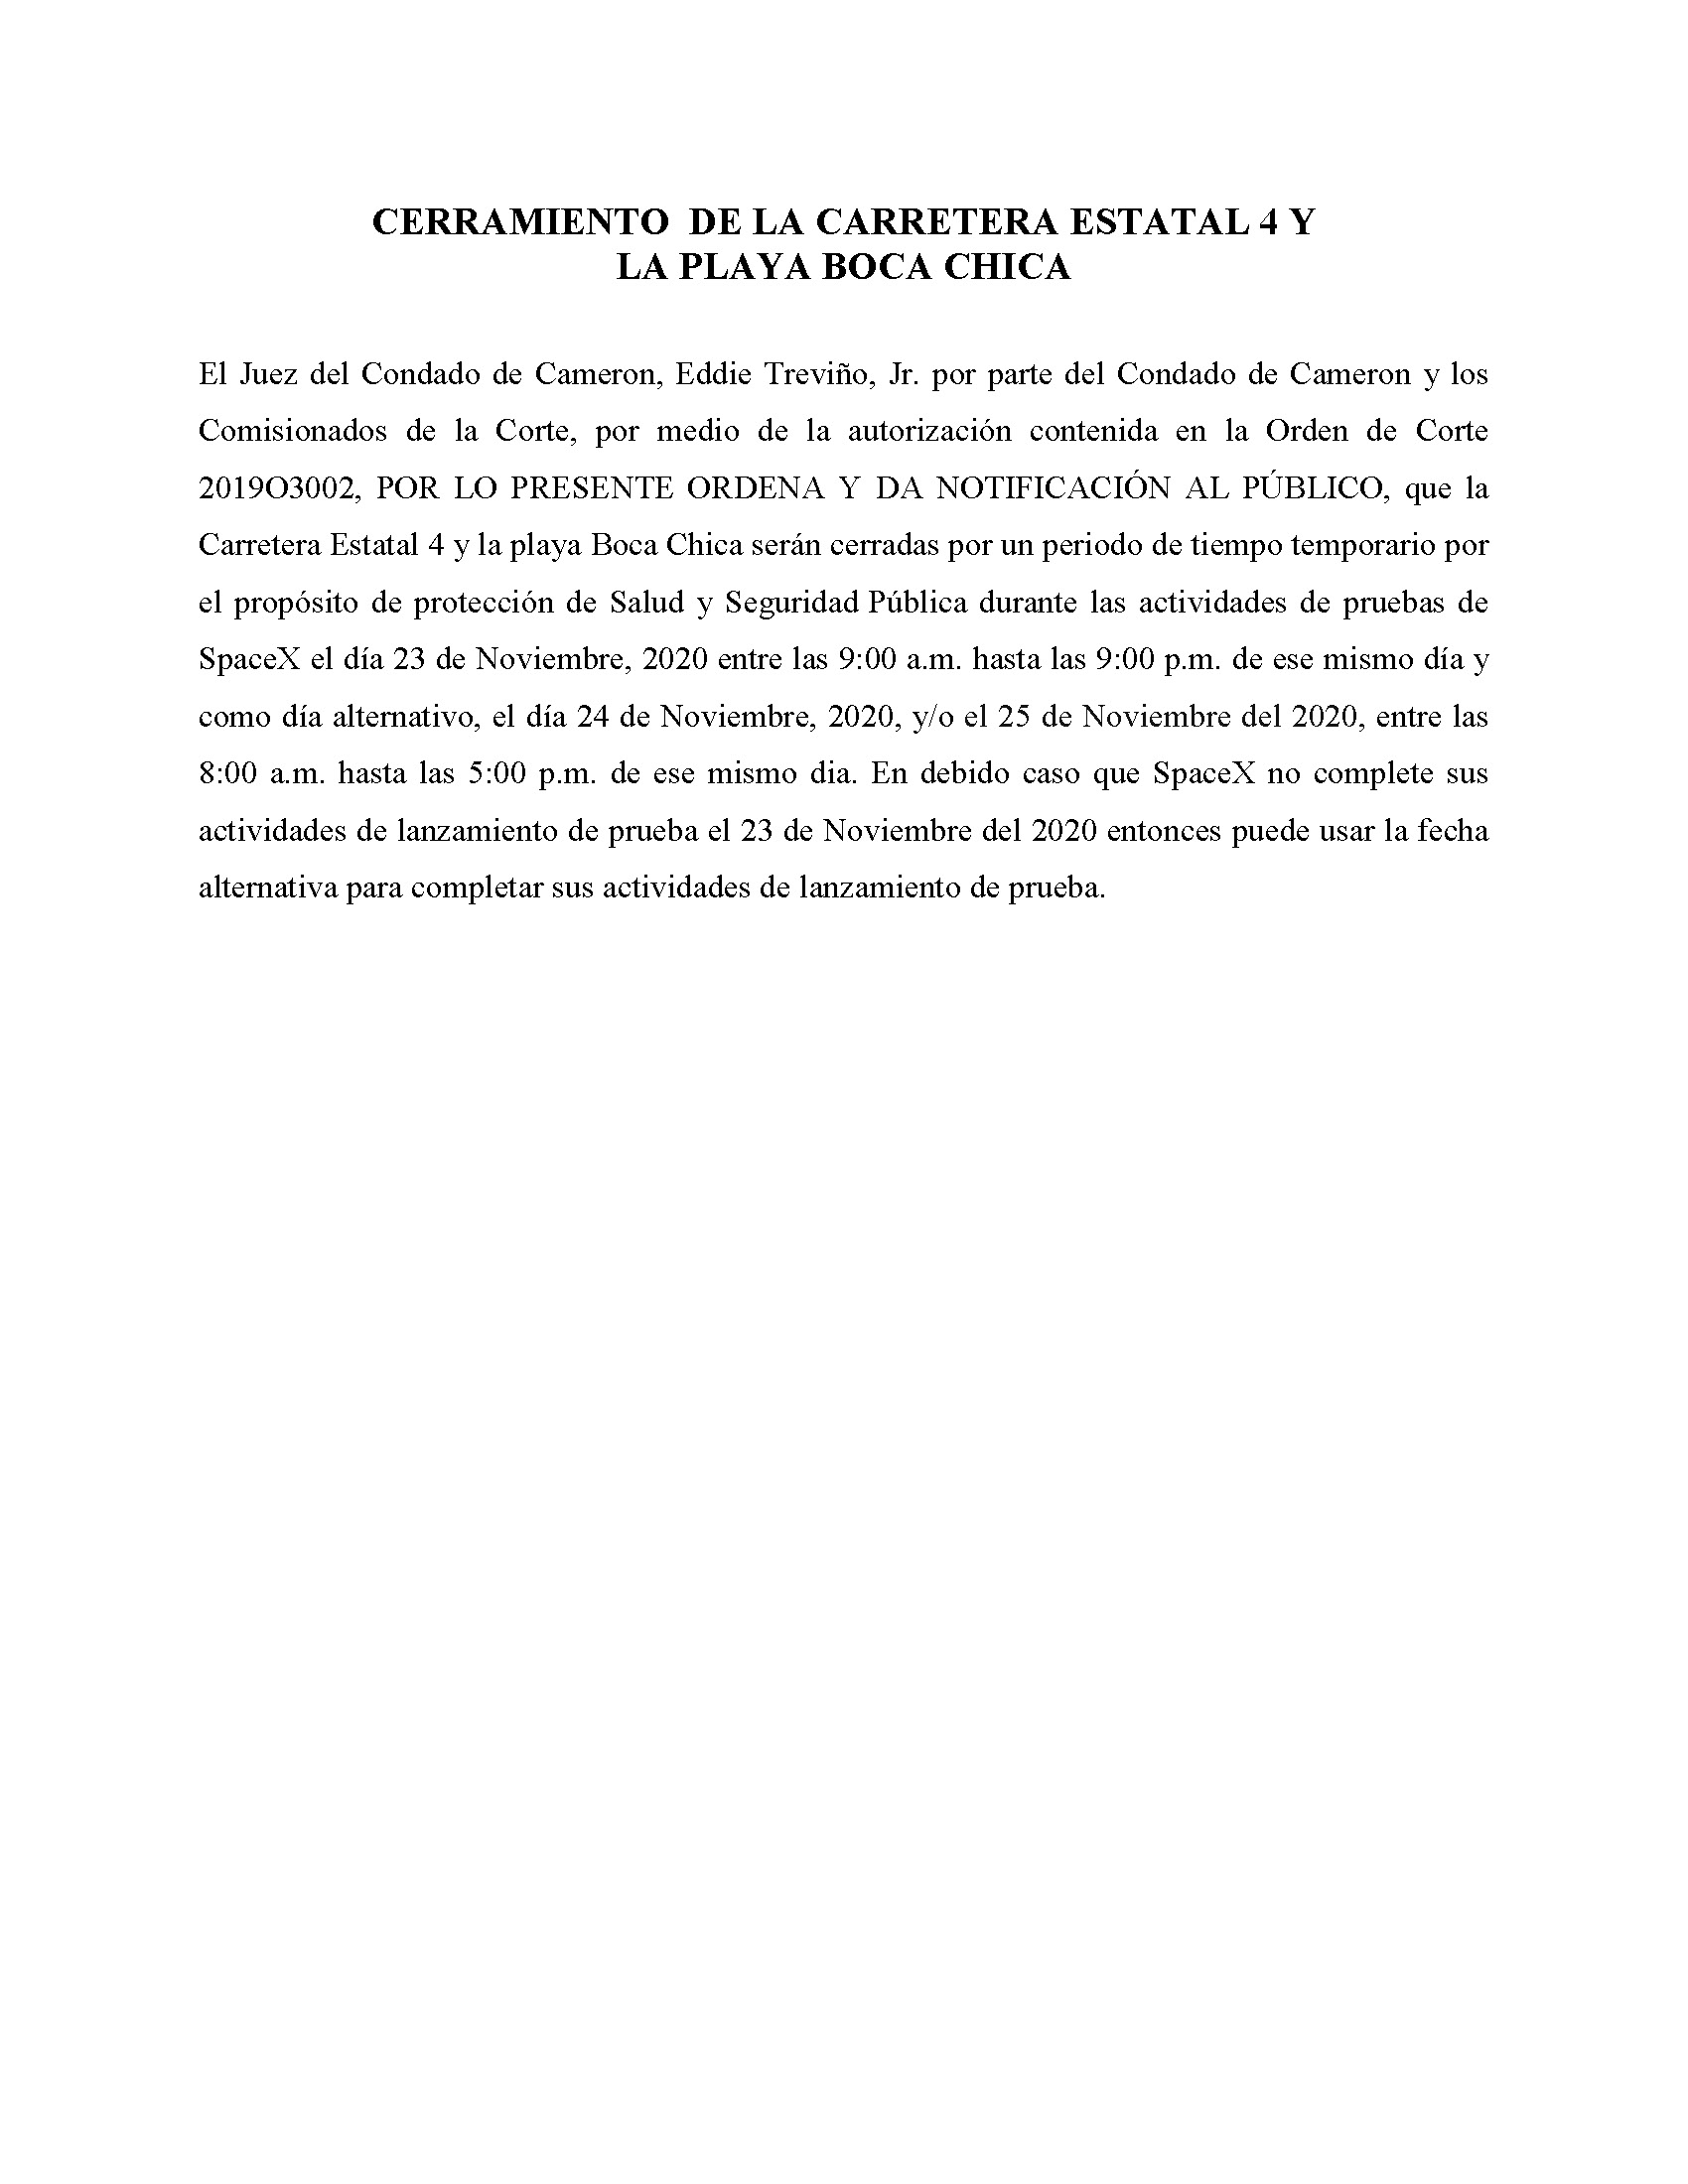 ORDER.CLOSURE OF HIGHWAY 4 Y LA PLAYA BOCA CHICA.SPANISH.11.23.20